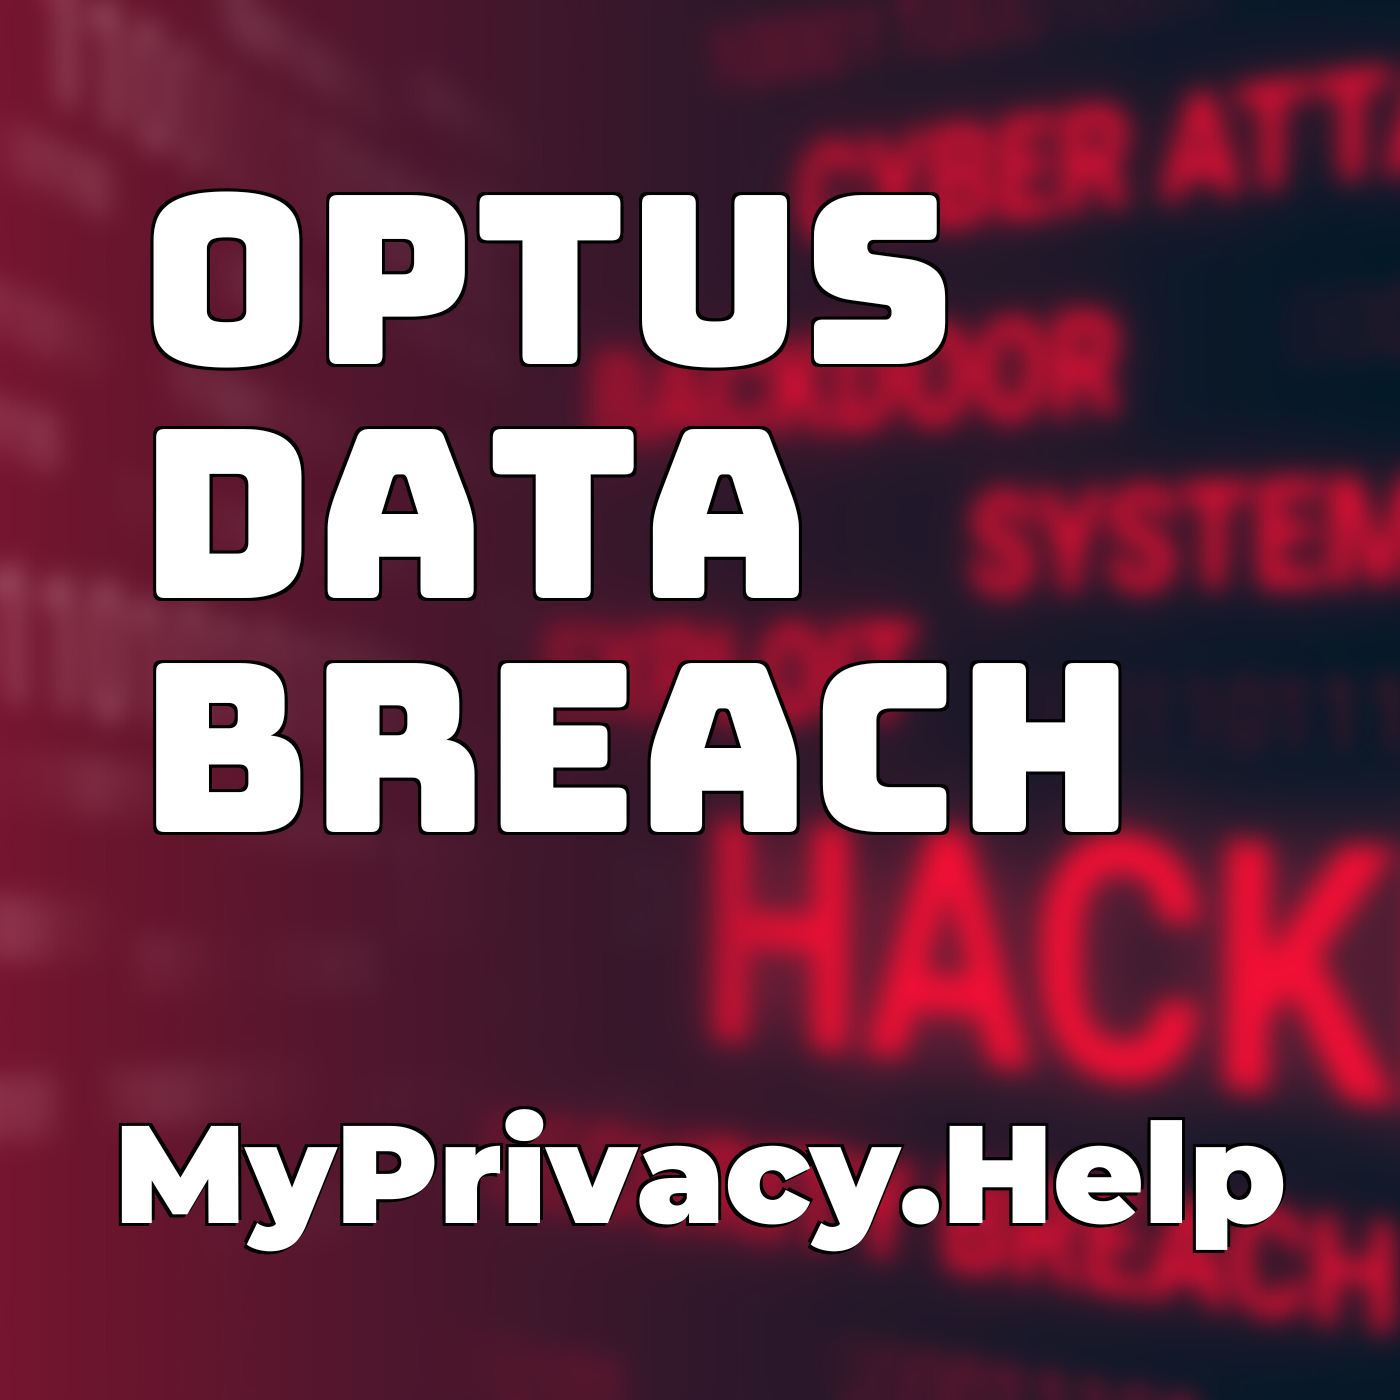 Optus data breach | MyPrivacy.Help (2)